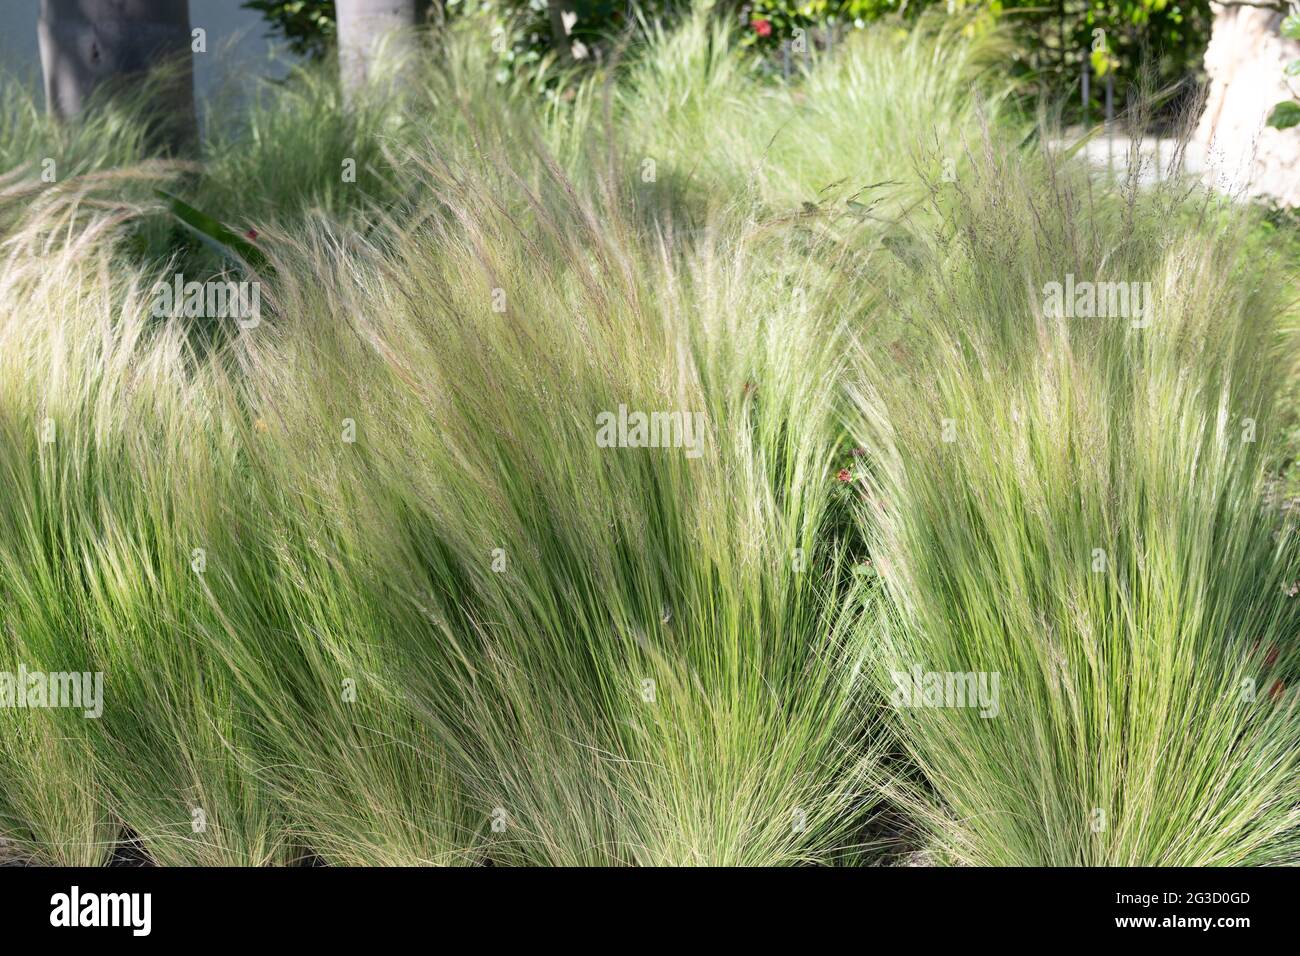 Nassella tenuissima or Mexican feathergrass ornamental grass plant grassy background, grasses Stock Photo